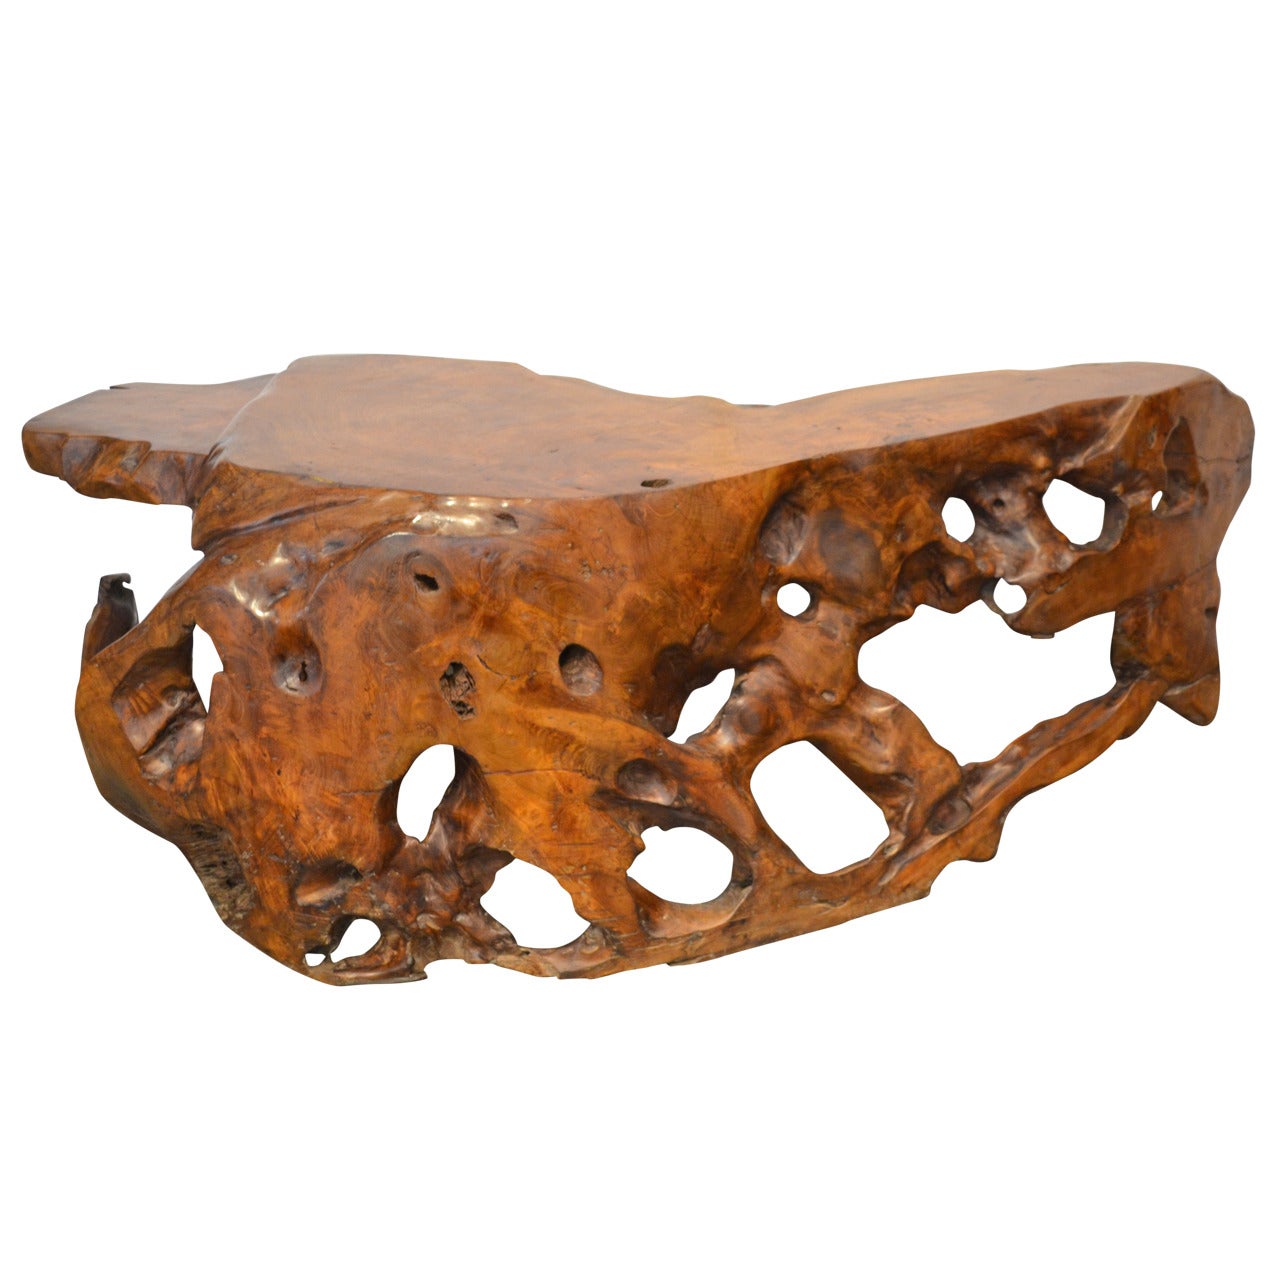 Organic Teak Wood Table or Sculptural Bench